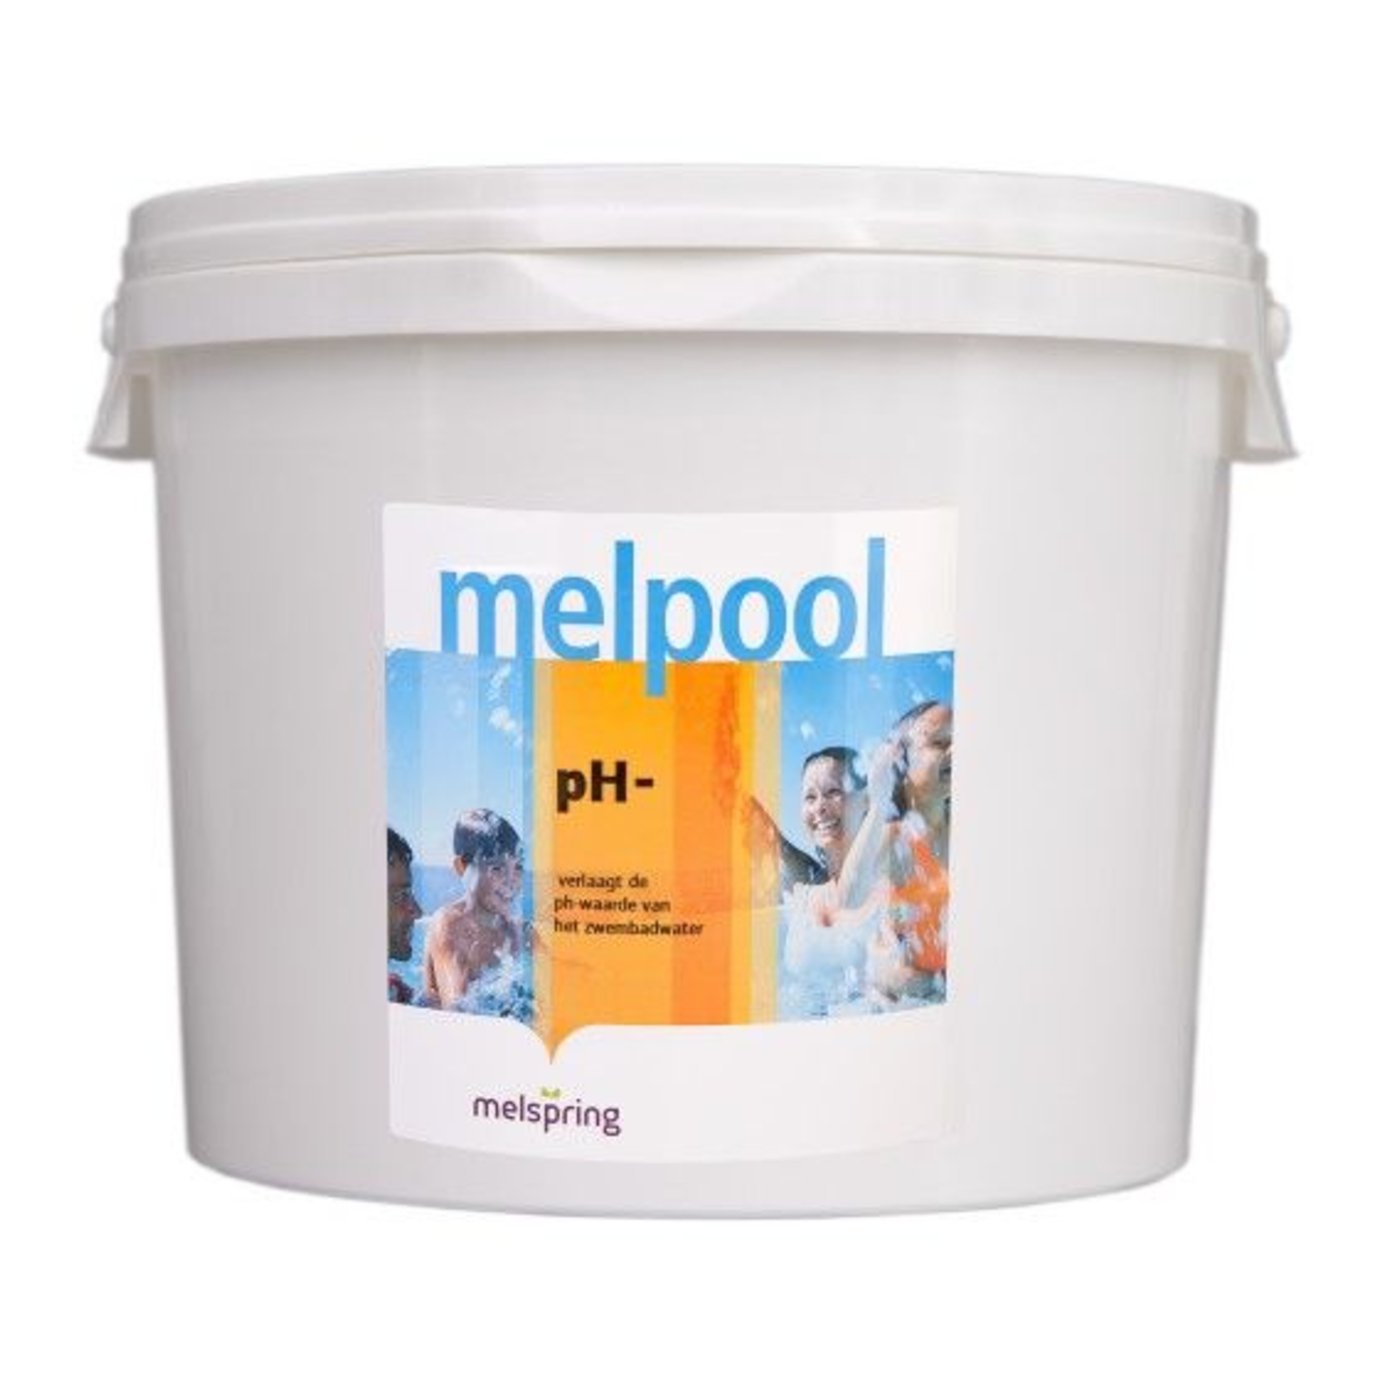 pH Minus poudre 7 kg - Melpool